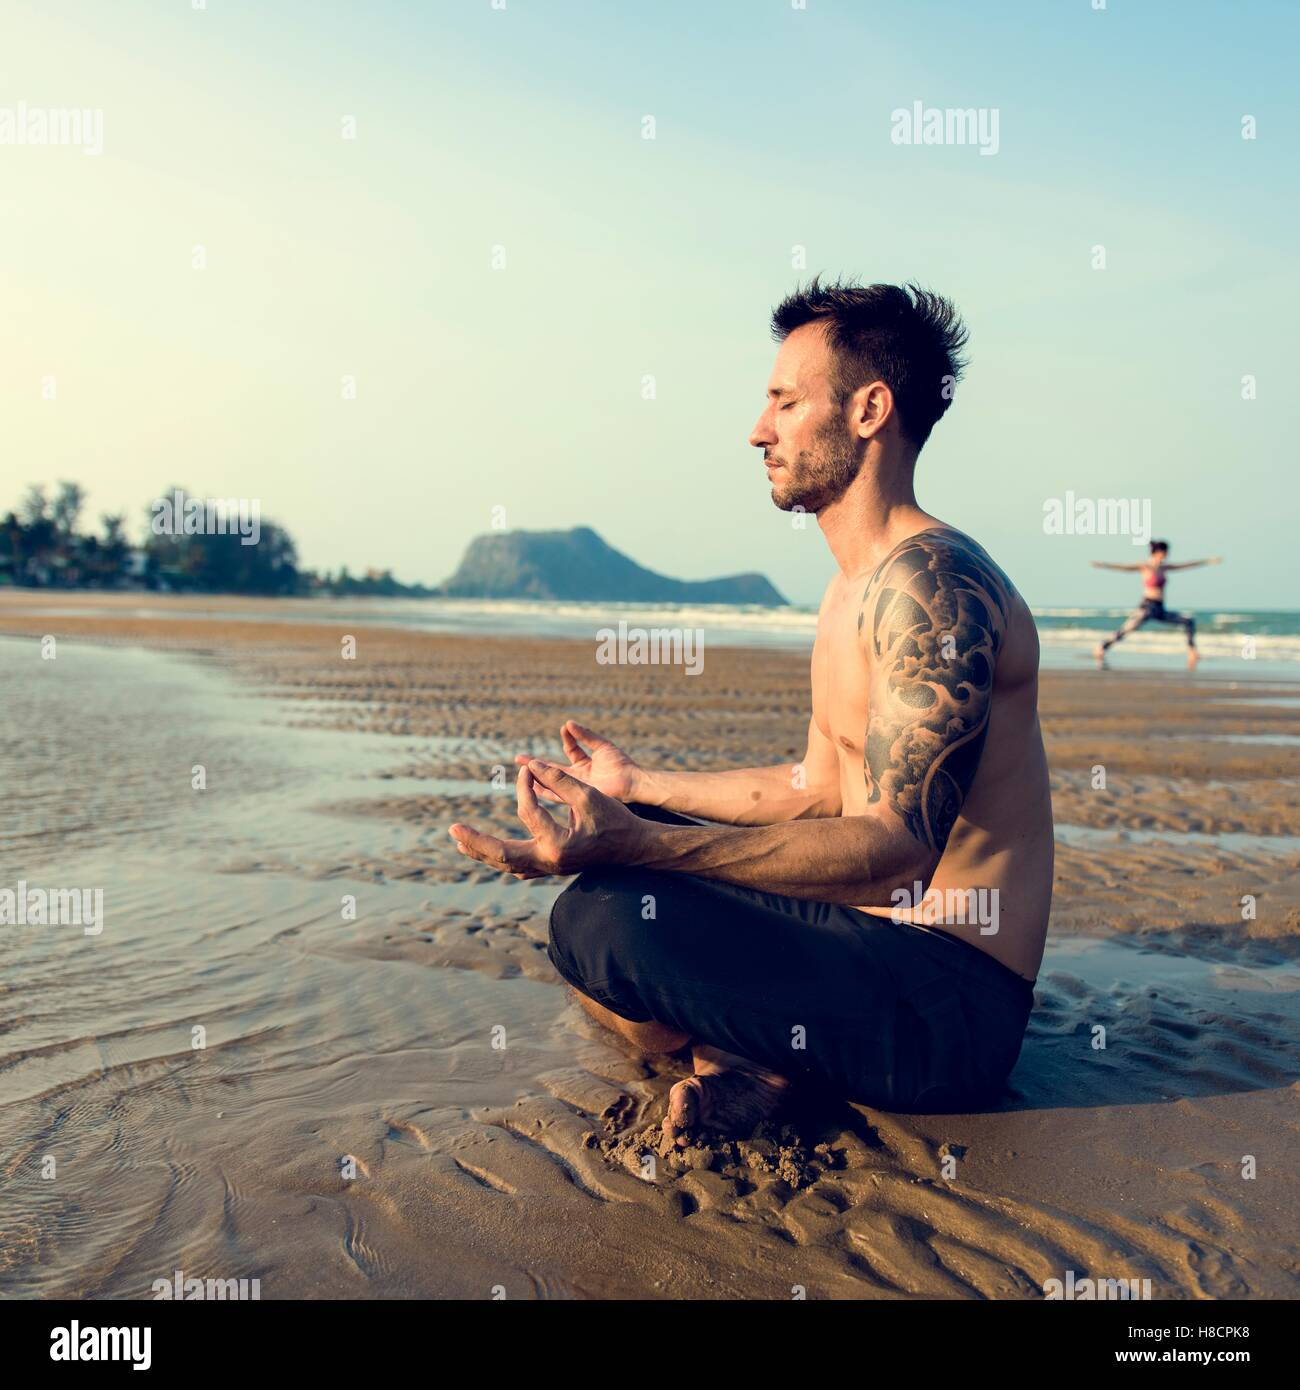 Yoga-Meditation-Konzentration-friedliche Ruhe und Entspannung-Konzept Stockfoto